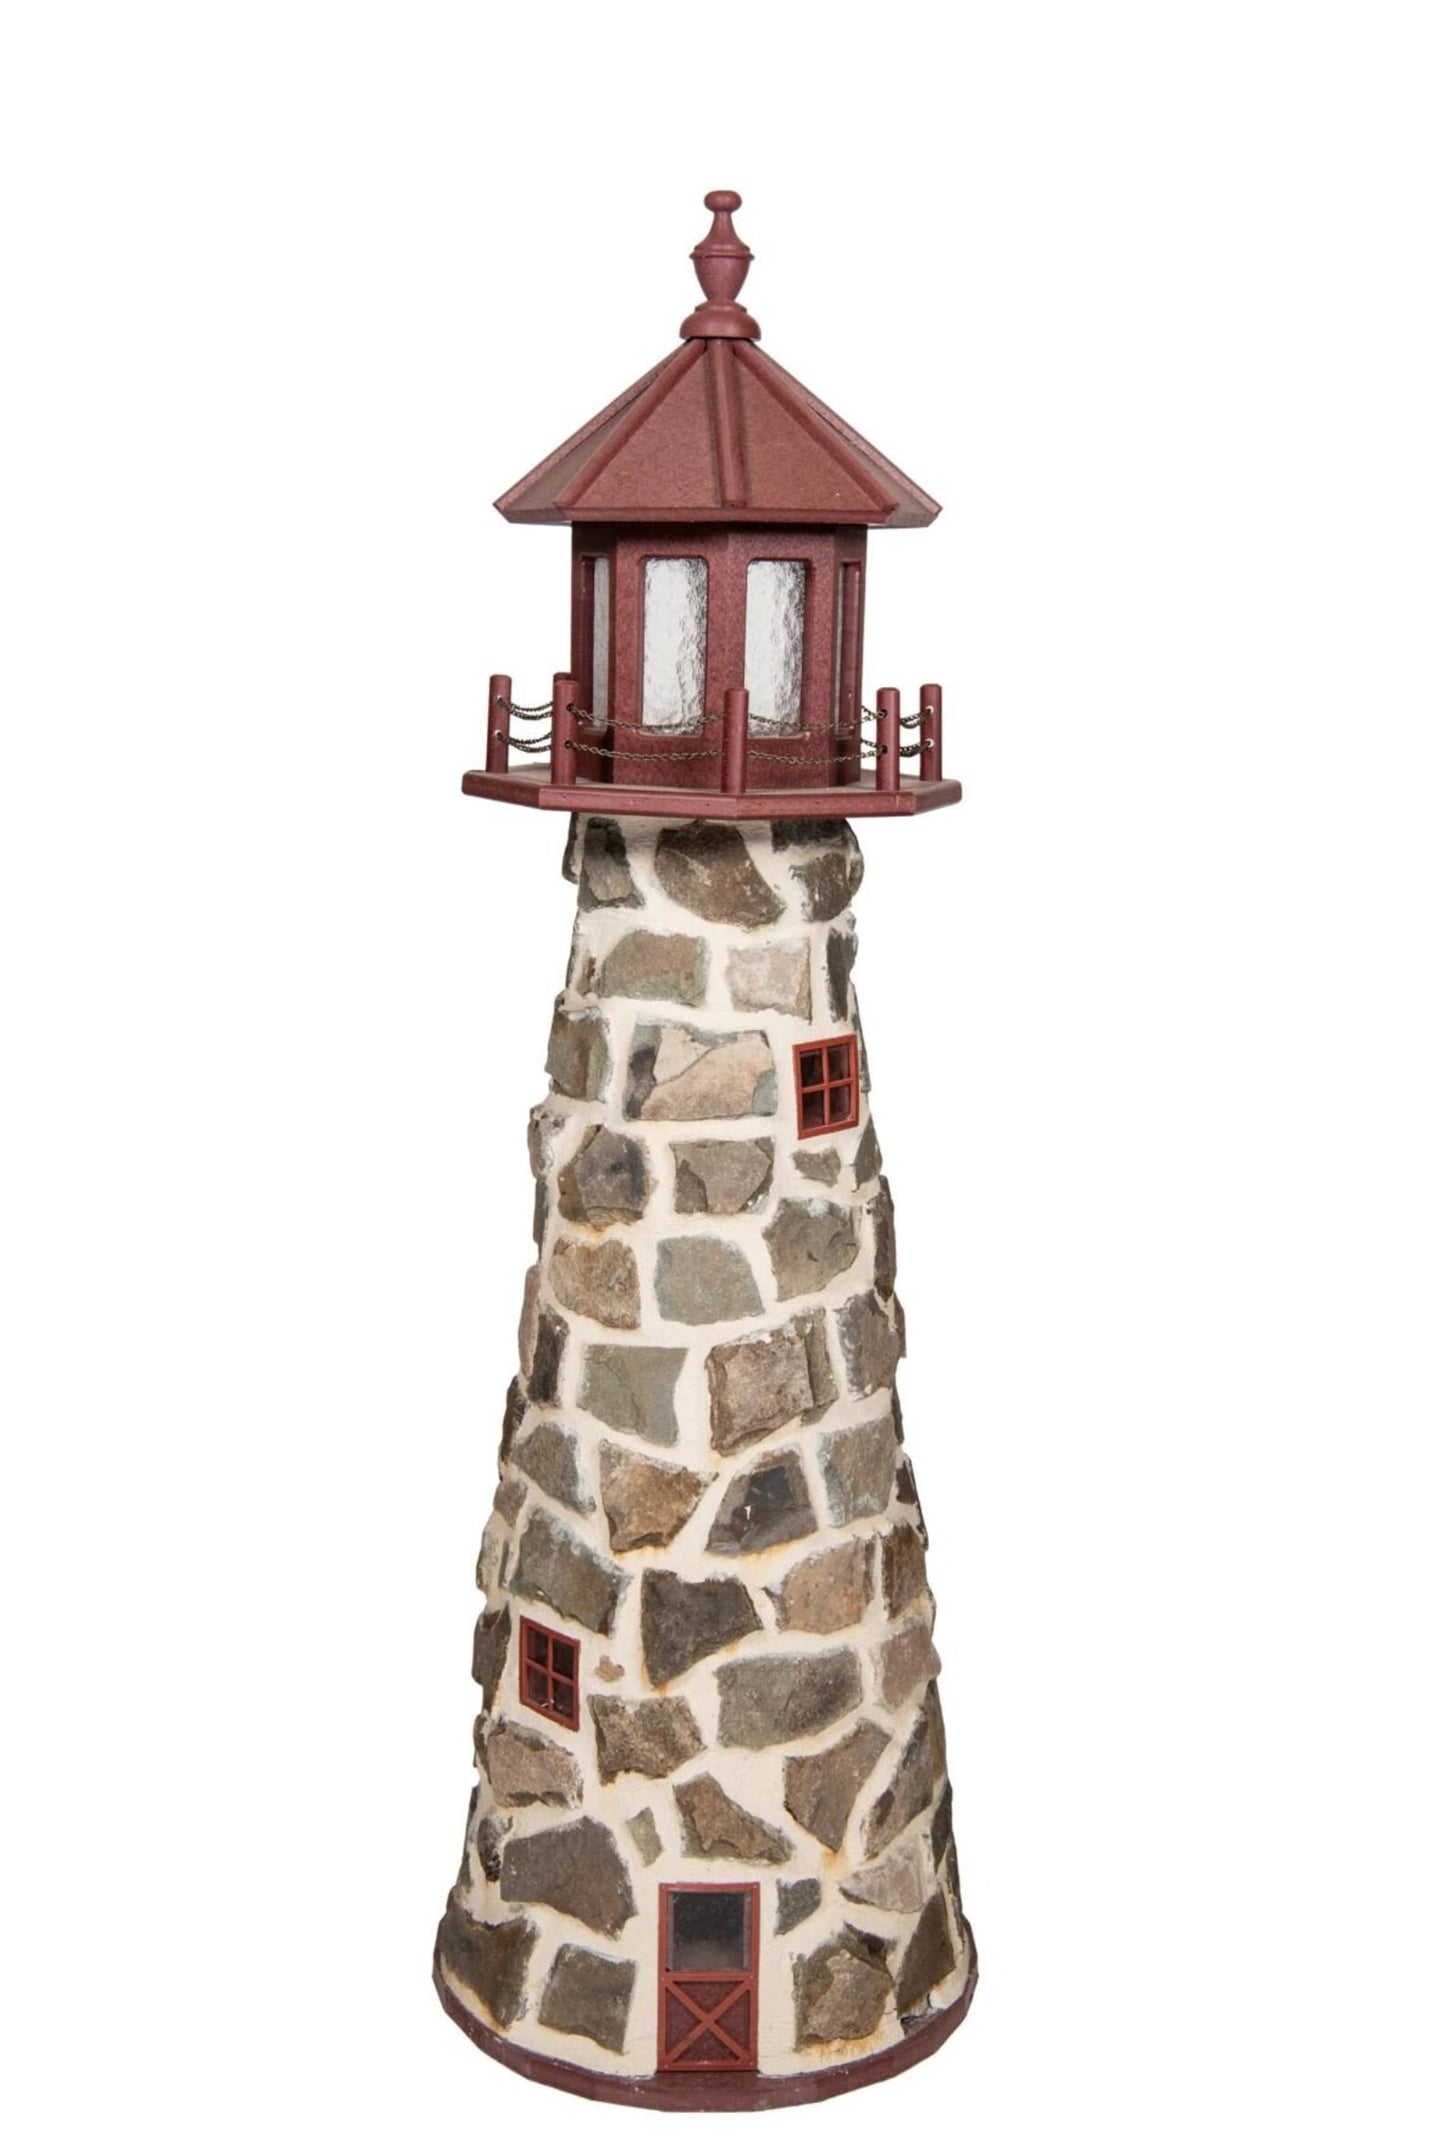 Amish handmade stone garden lighthouse